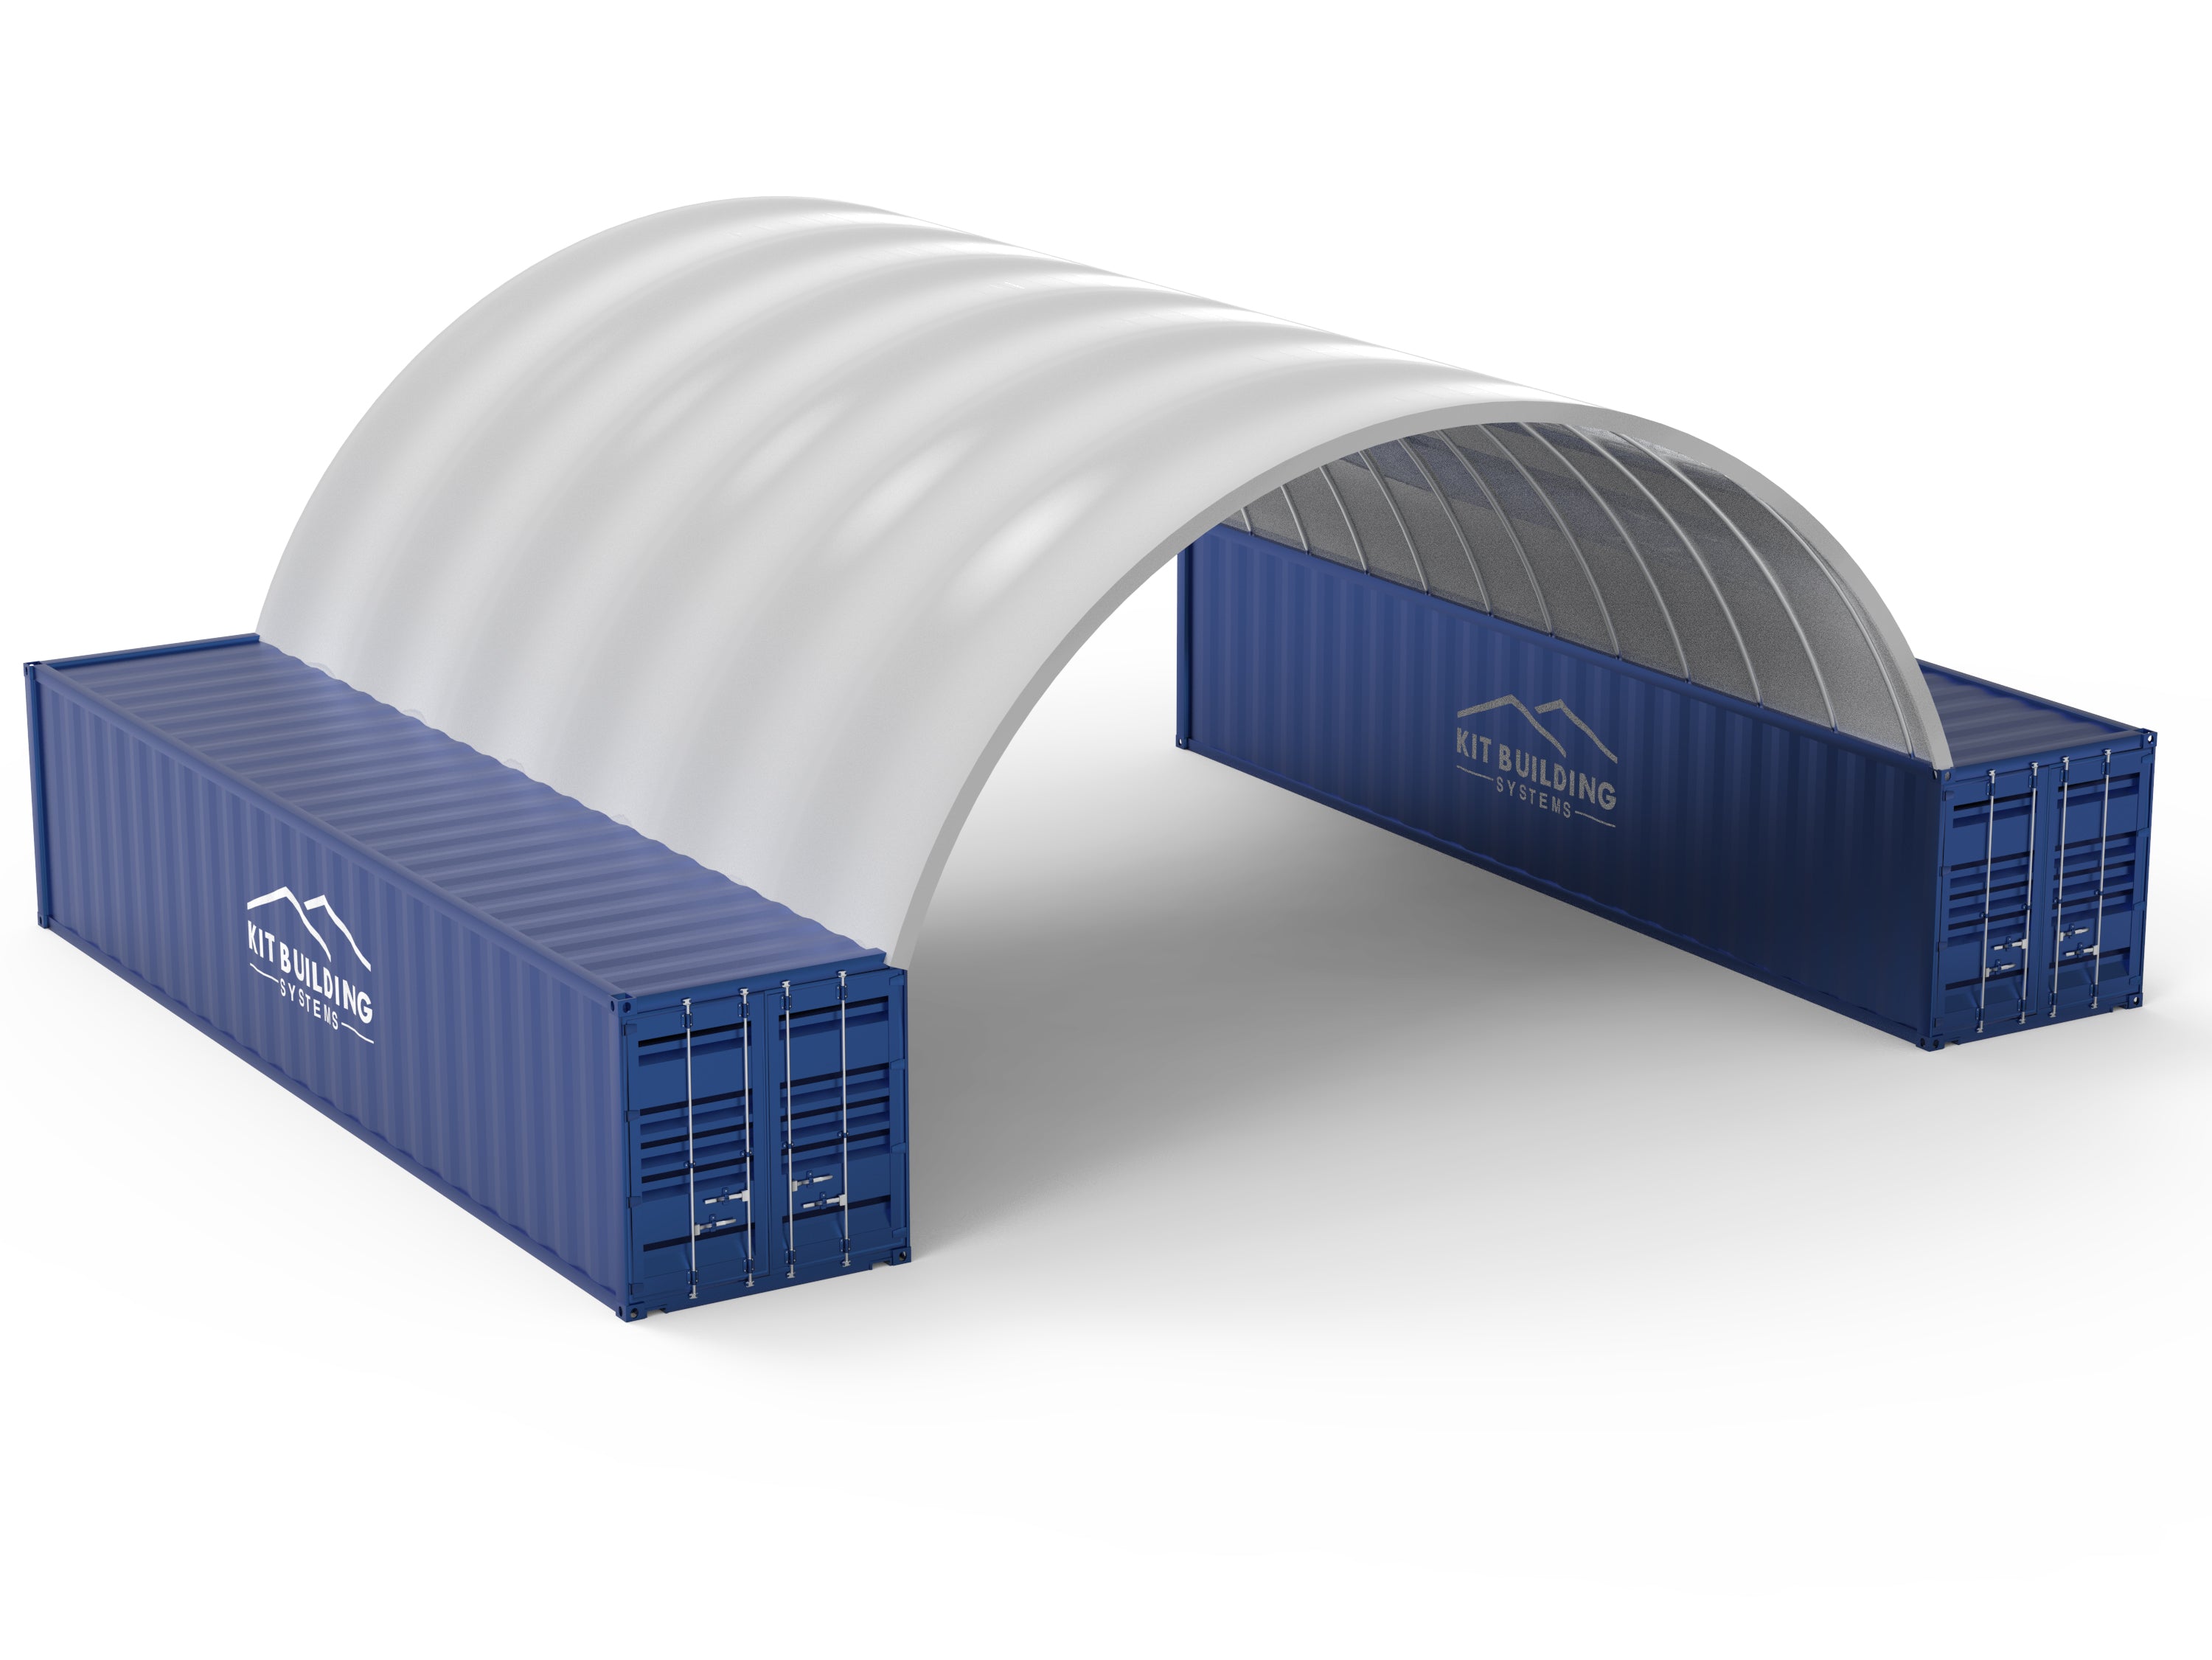 Containerunterstand – 33 Fuß x 40 Fuß x 12 Fuß (10 m x 12 m x 3,6 m)